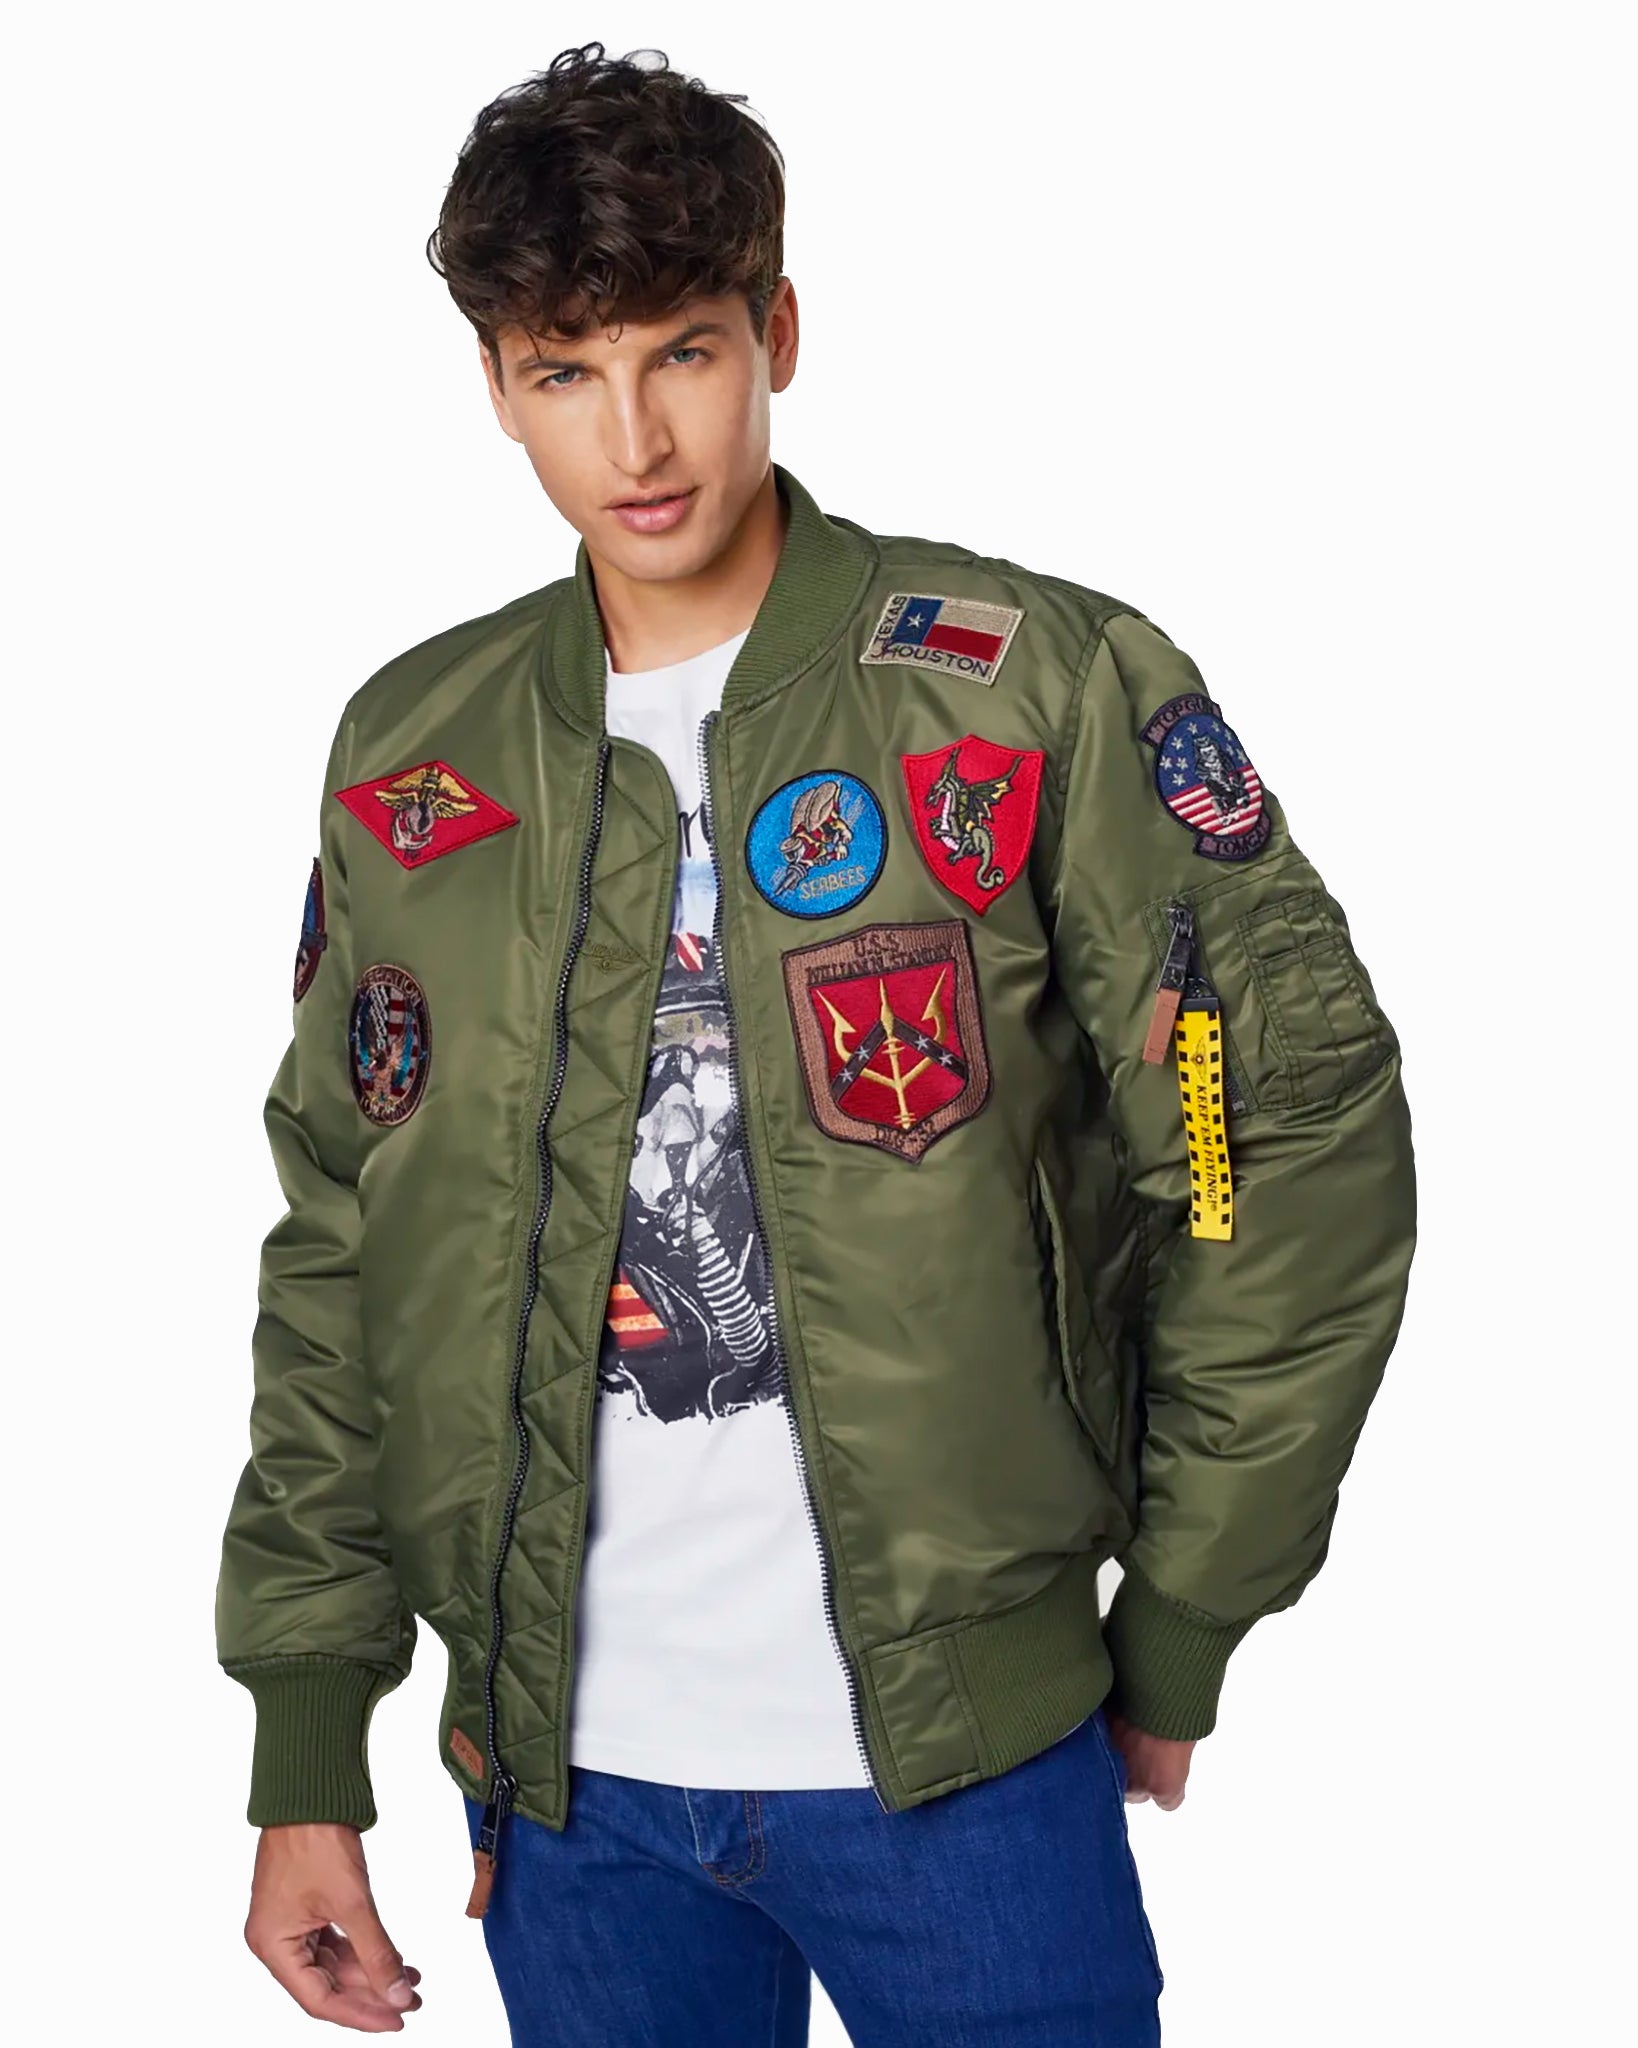 krøllet Slumber Samler blade Men's Jacket | The Official Top Gun Store | Military Bomber Jacket, Flight  jacket, Tom Cruise Maverick Jacket, Leather jacket,Jackets with patches